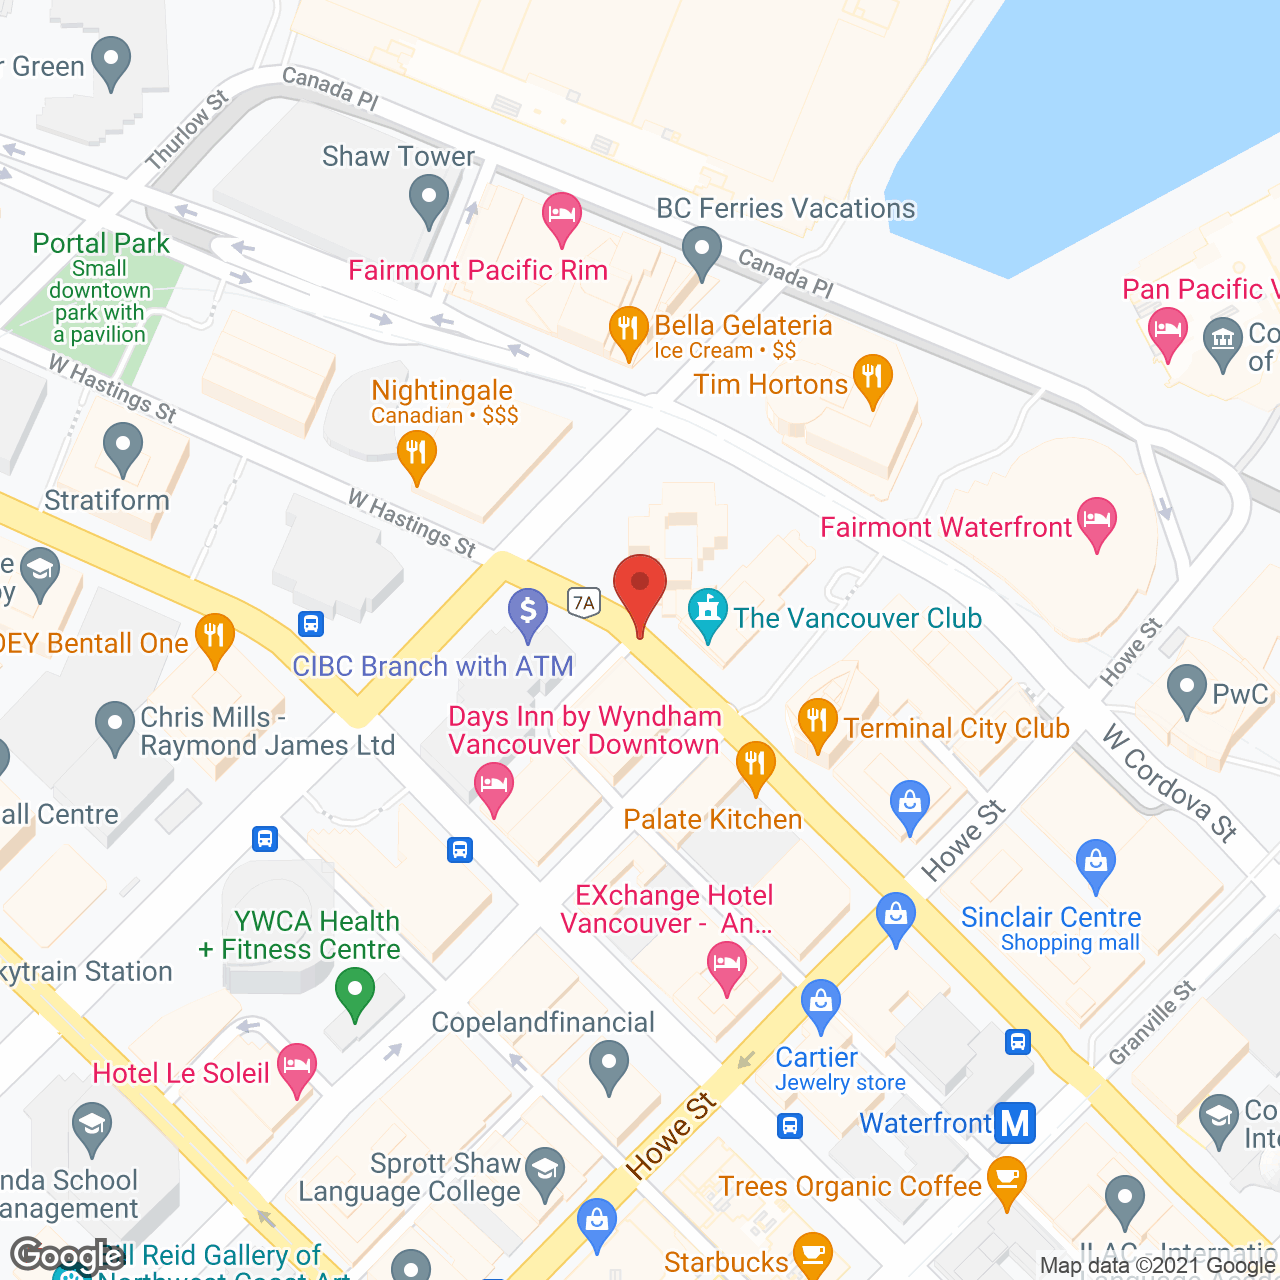 Grand Union Hotel in google map